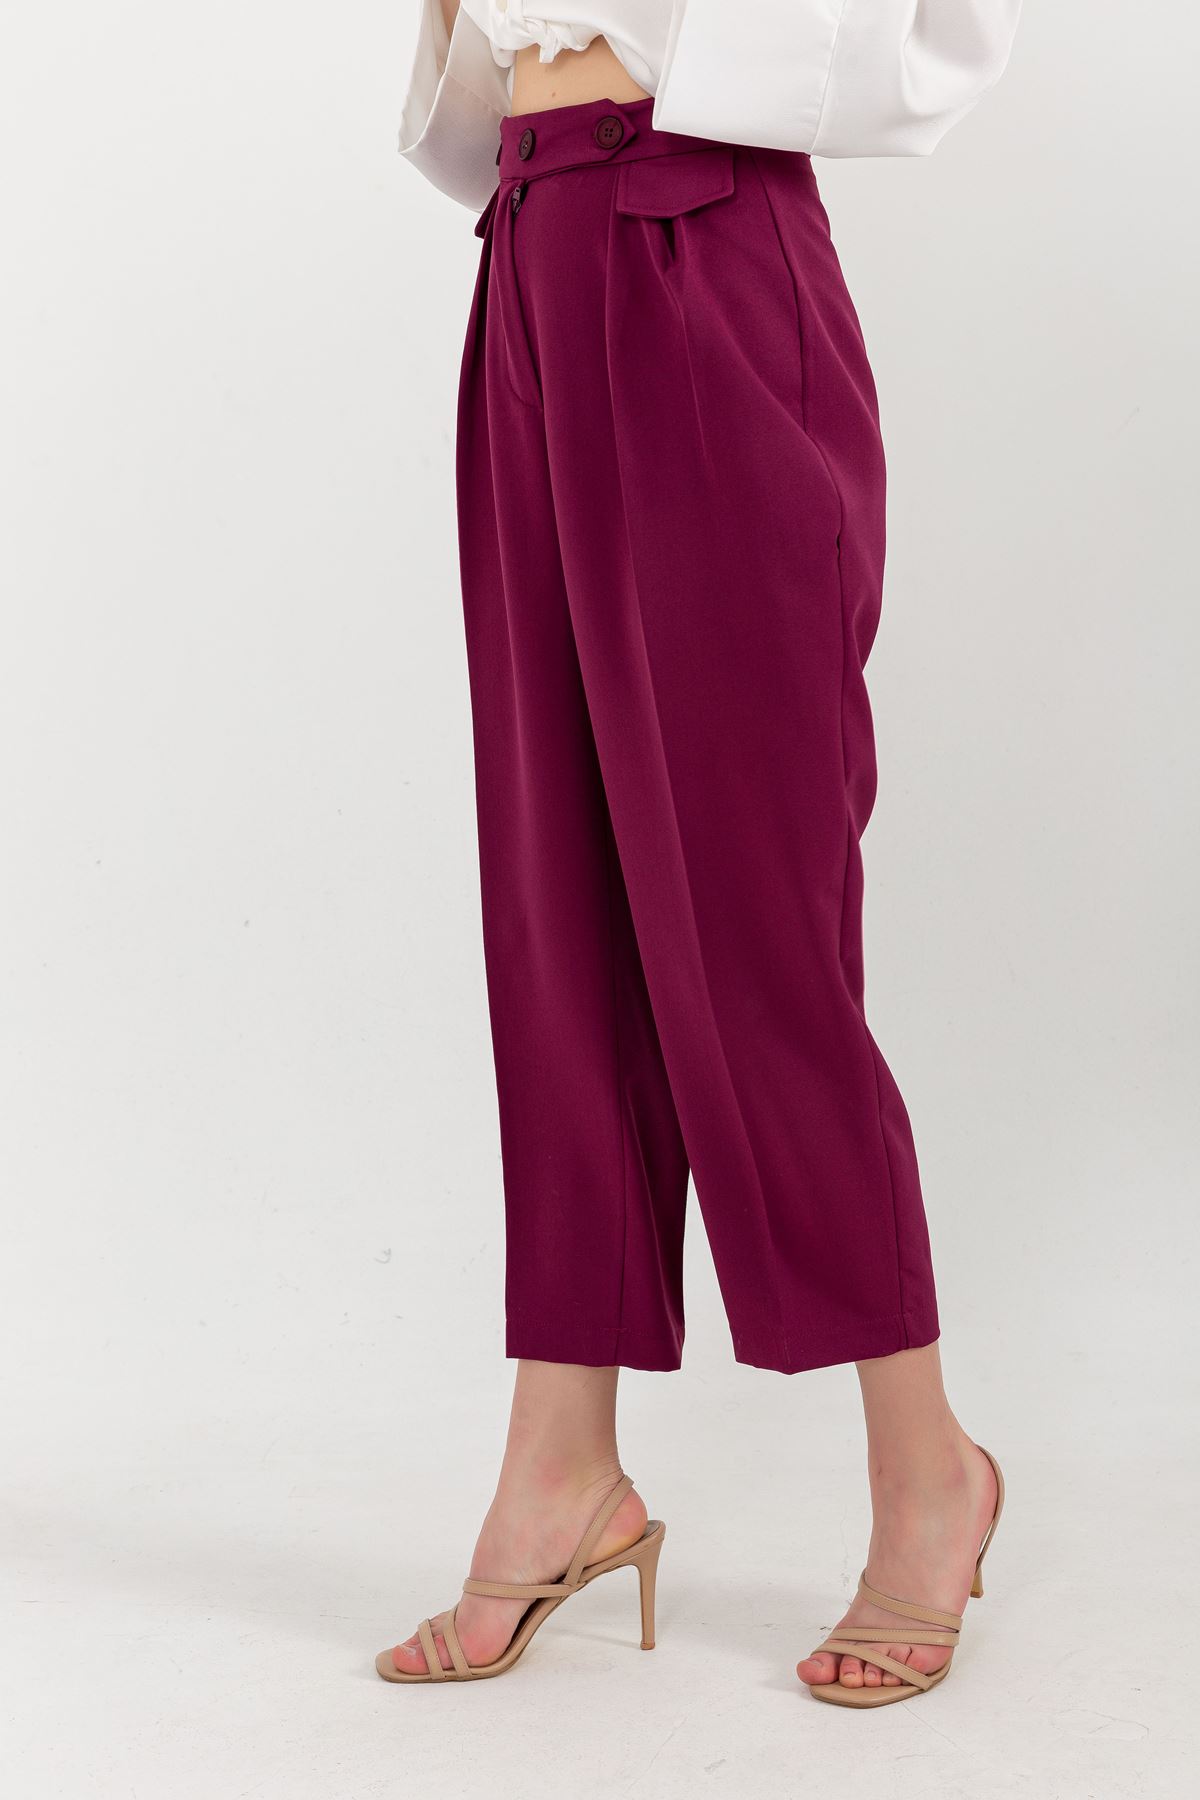 Atlas Fabric Ankle Length Carrot Style Women Trouser-Plum 